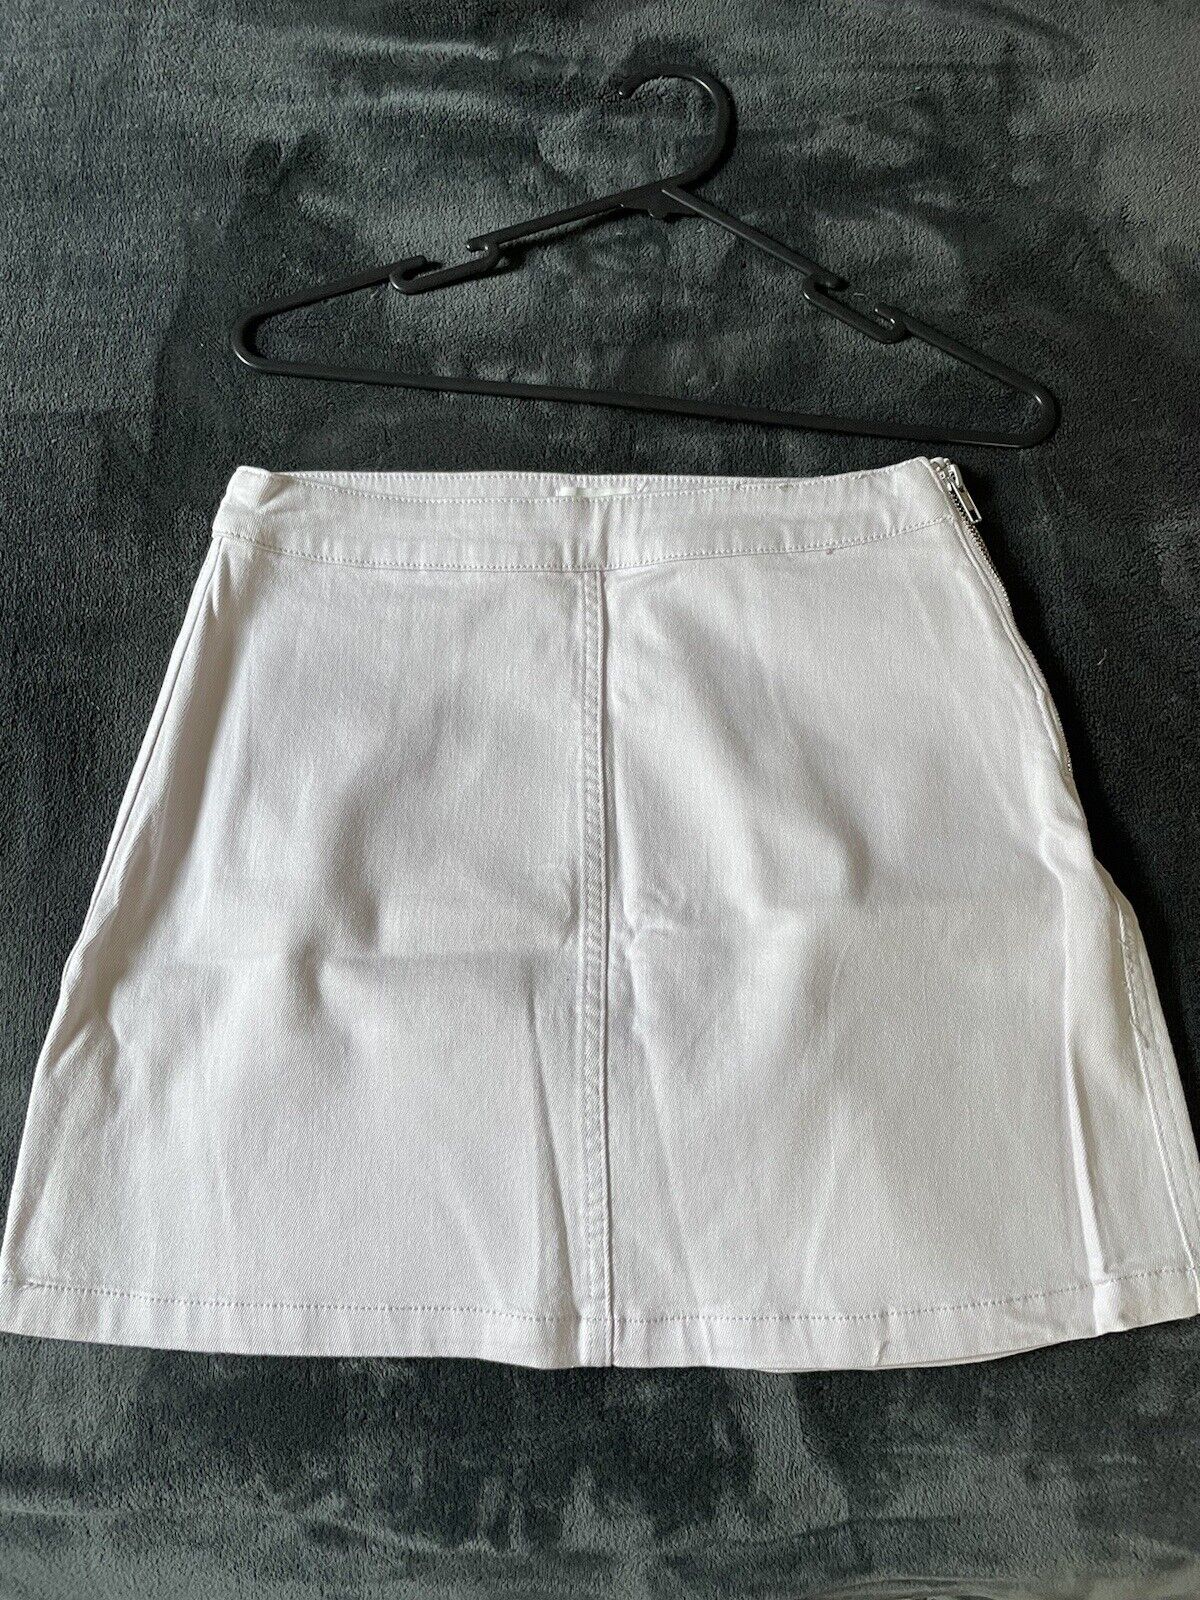 Women’s Seed Skirt Size 8 BNWT